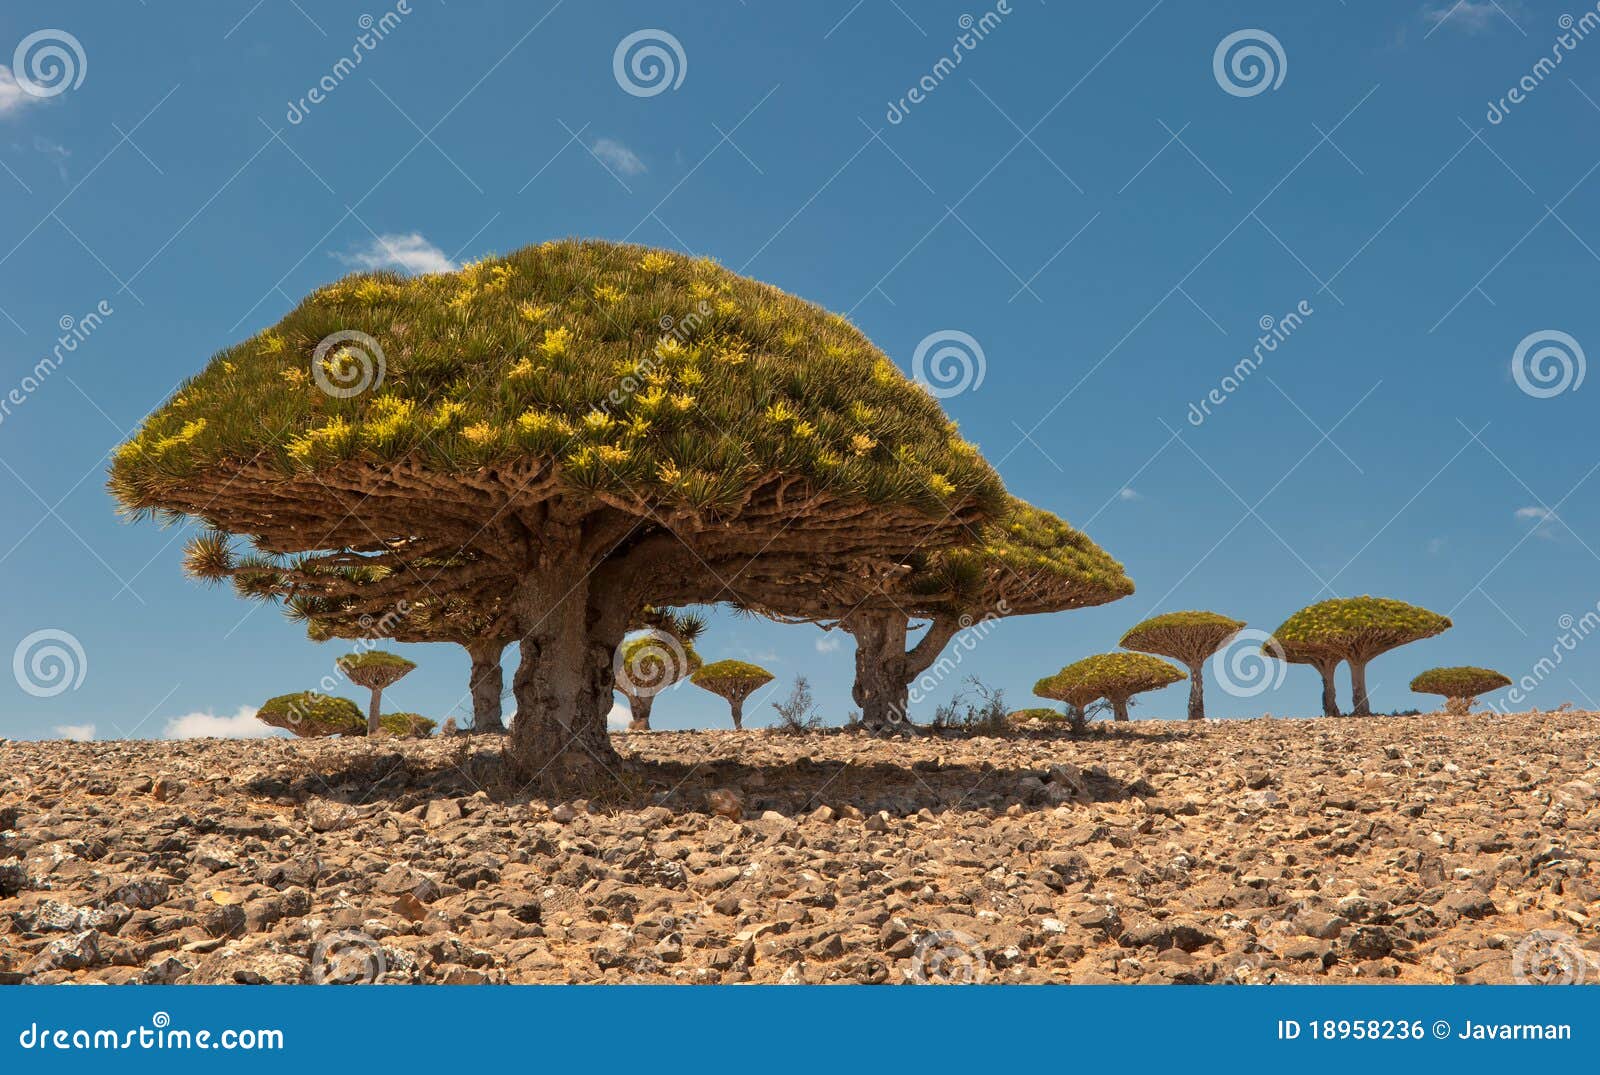 dragon trees at dixam plateau, socotra, yemen